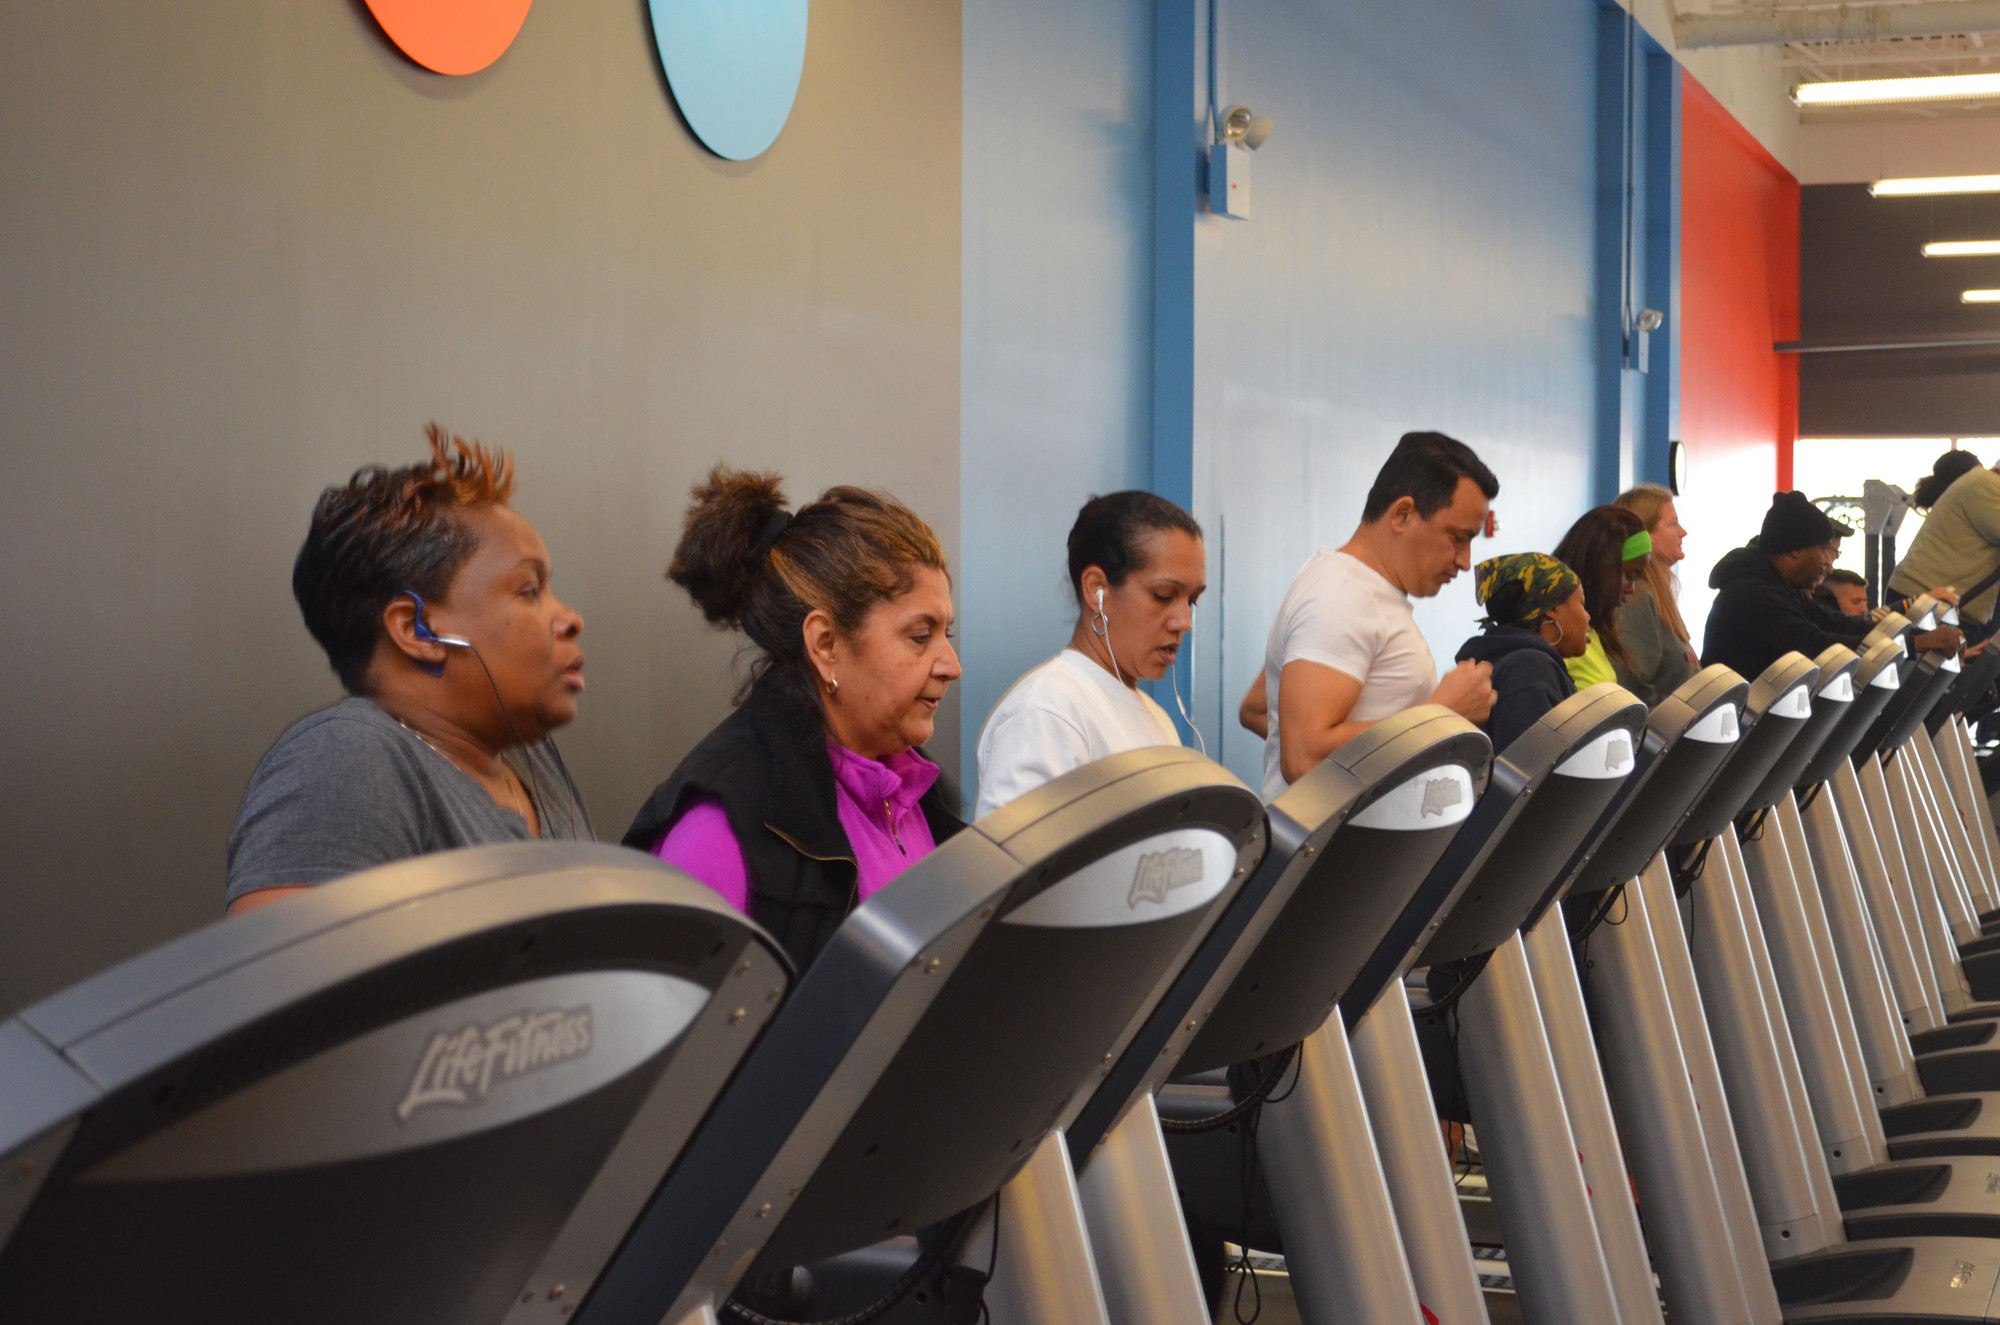 Locals took their first spins on Blink’s new treadmills last week.